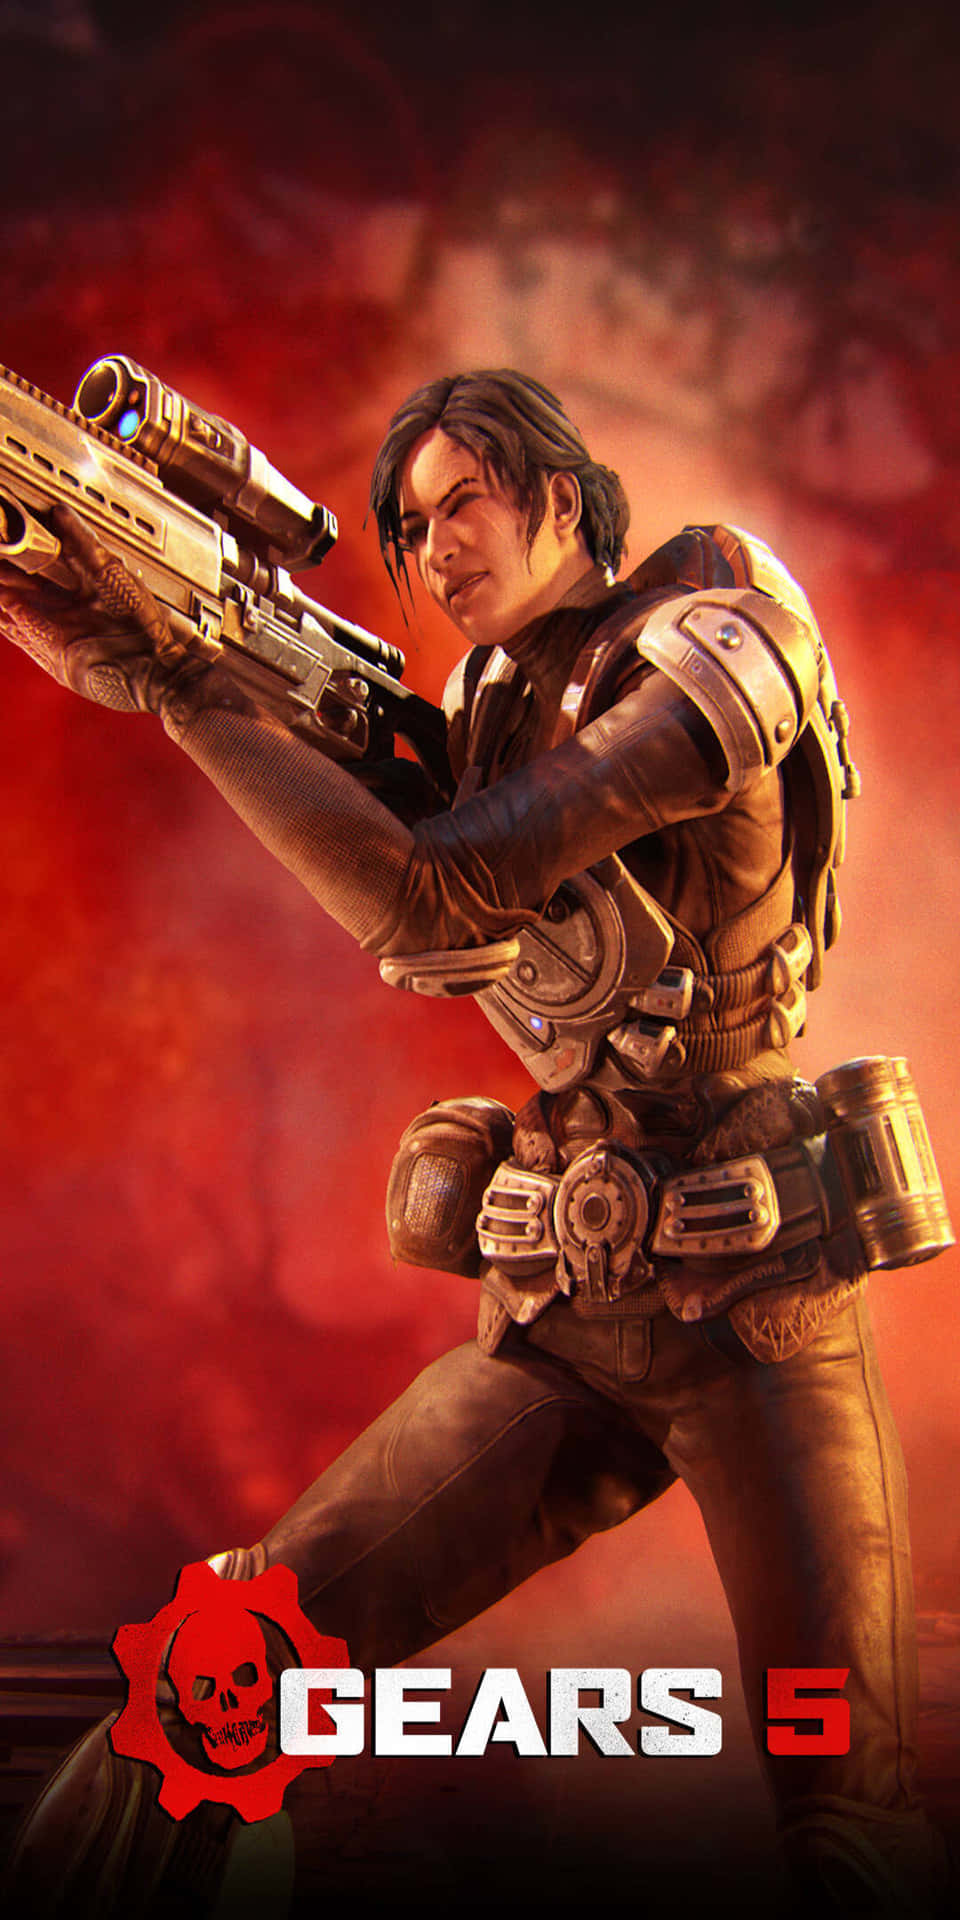 Progettodi Poster Di Kait Diaz Su Pixel 3 Sfondo Di Gears Of War 5.